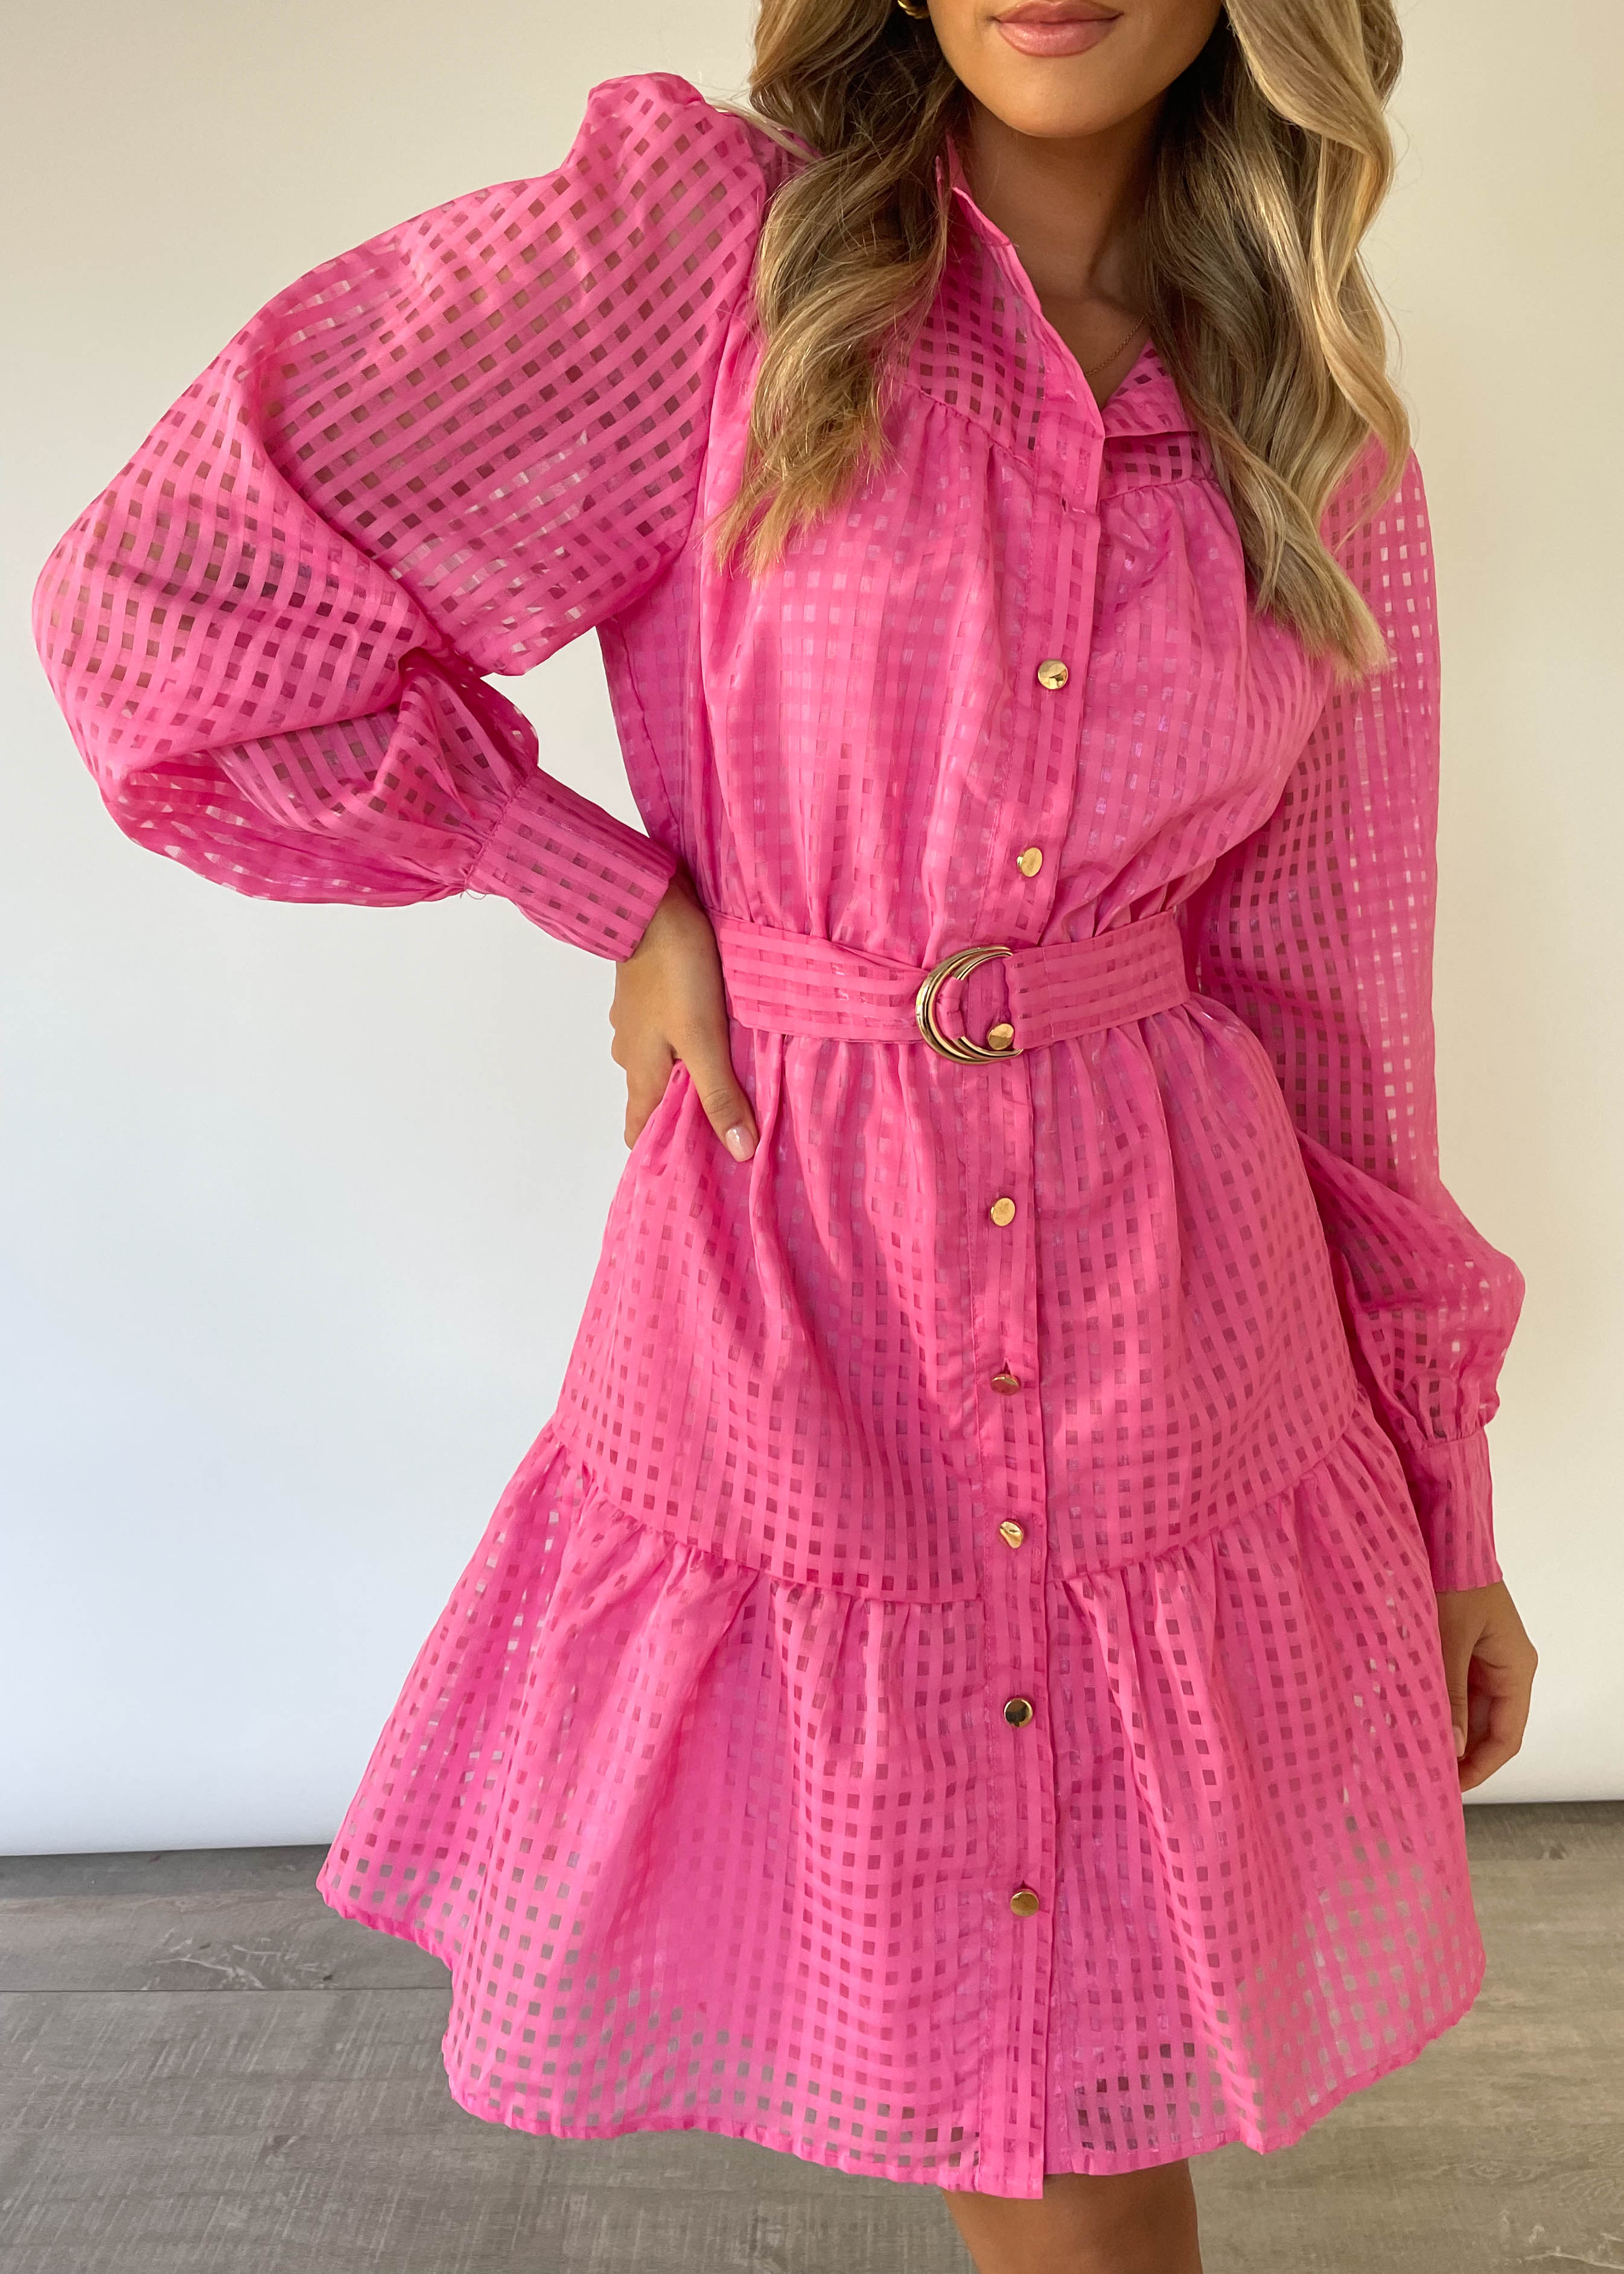 Leanora Dress - Hot Pink